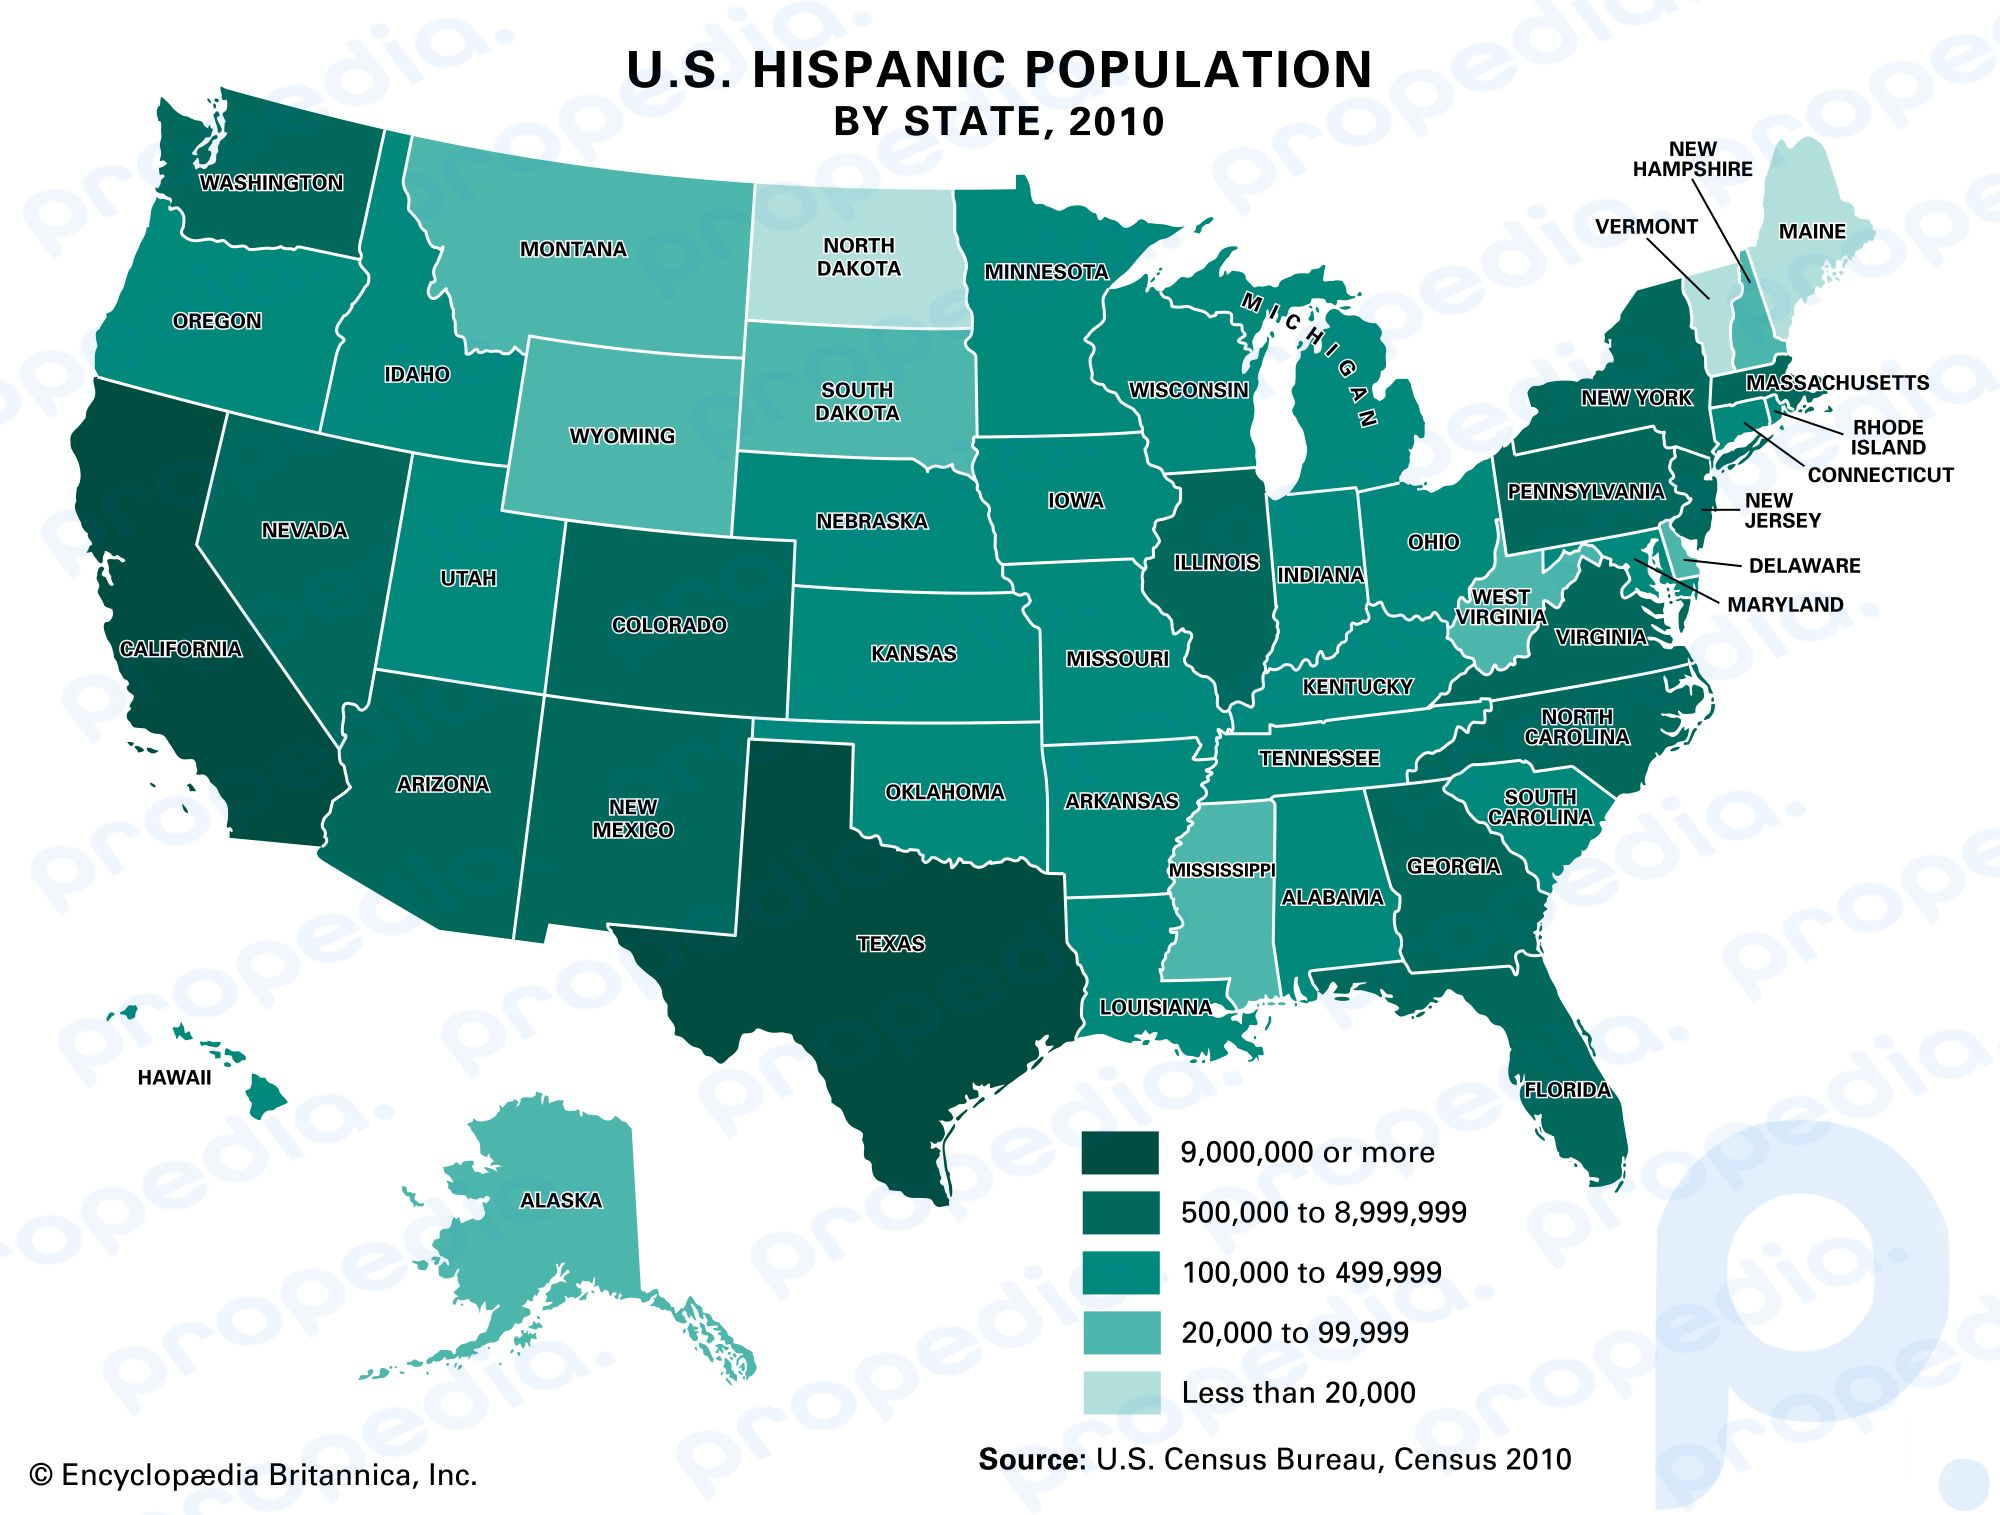 U.S. Hispanic population by state, 2010